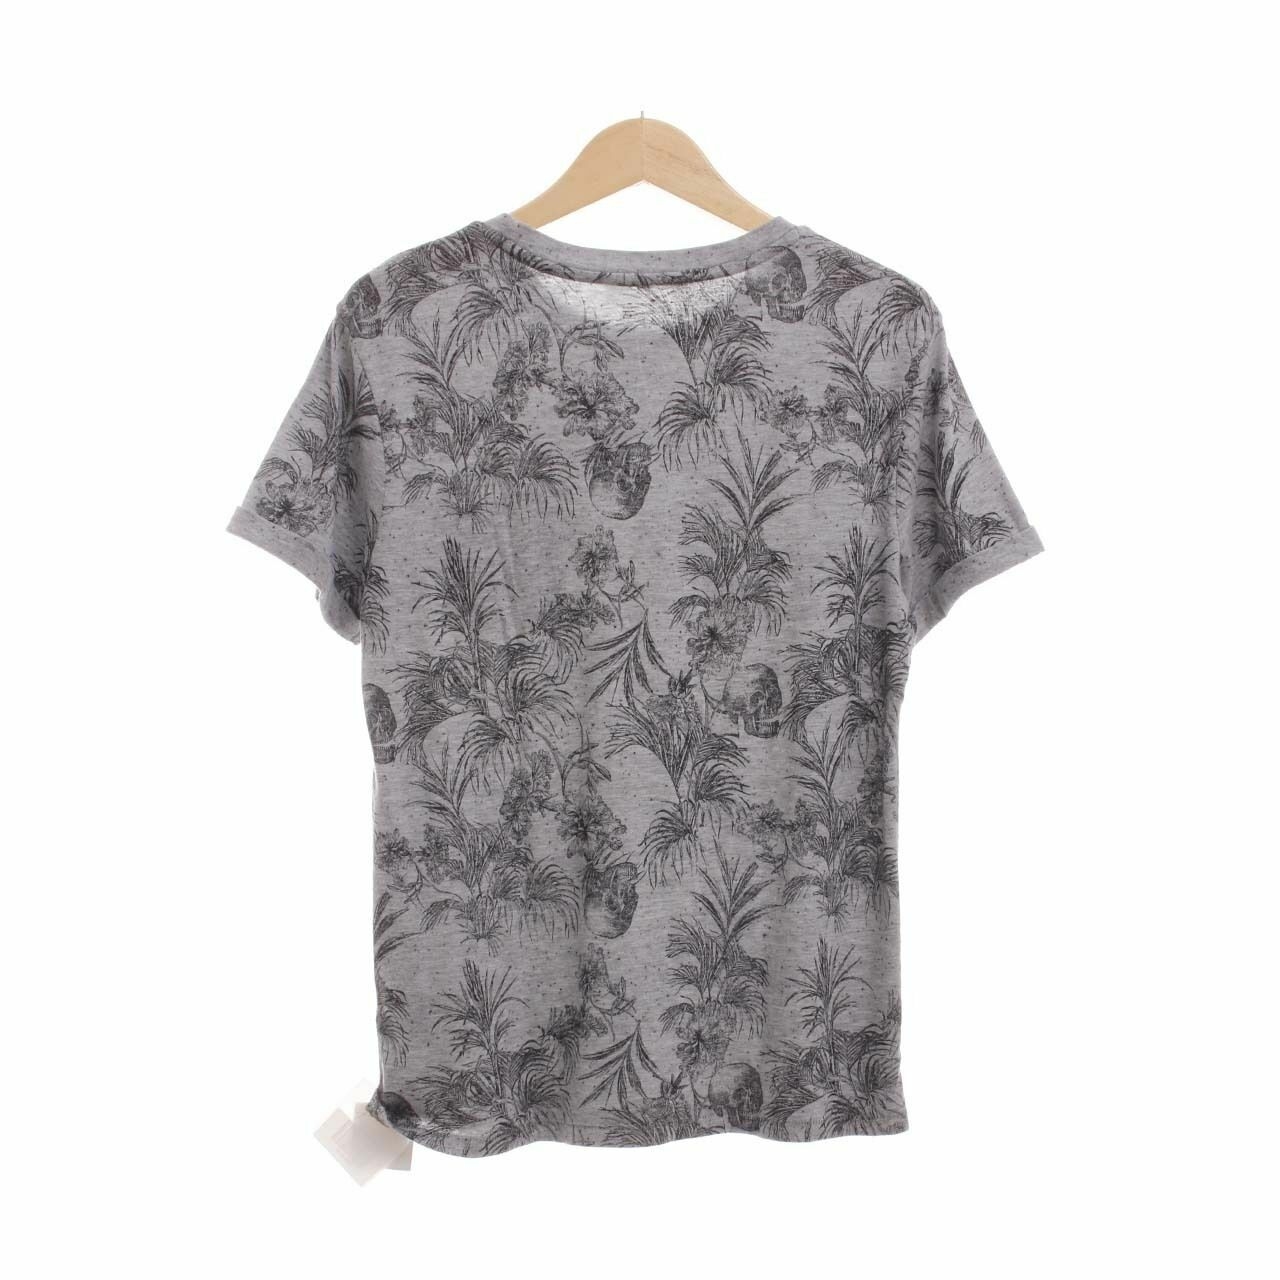 H&M Grey T-Shirt